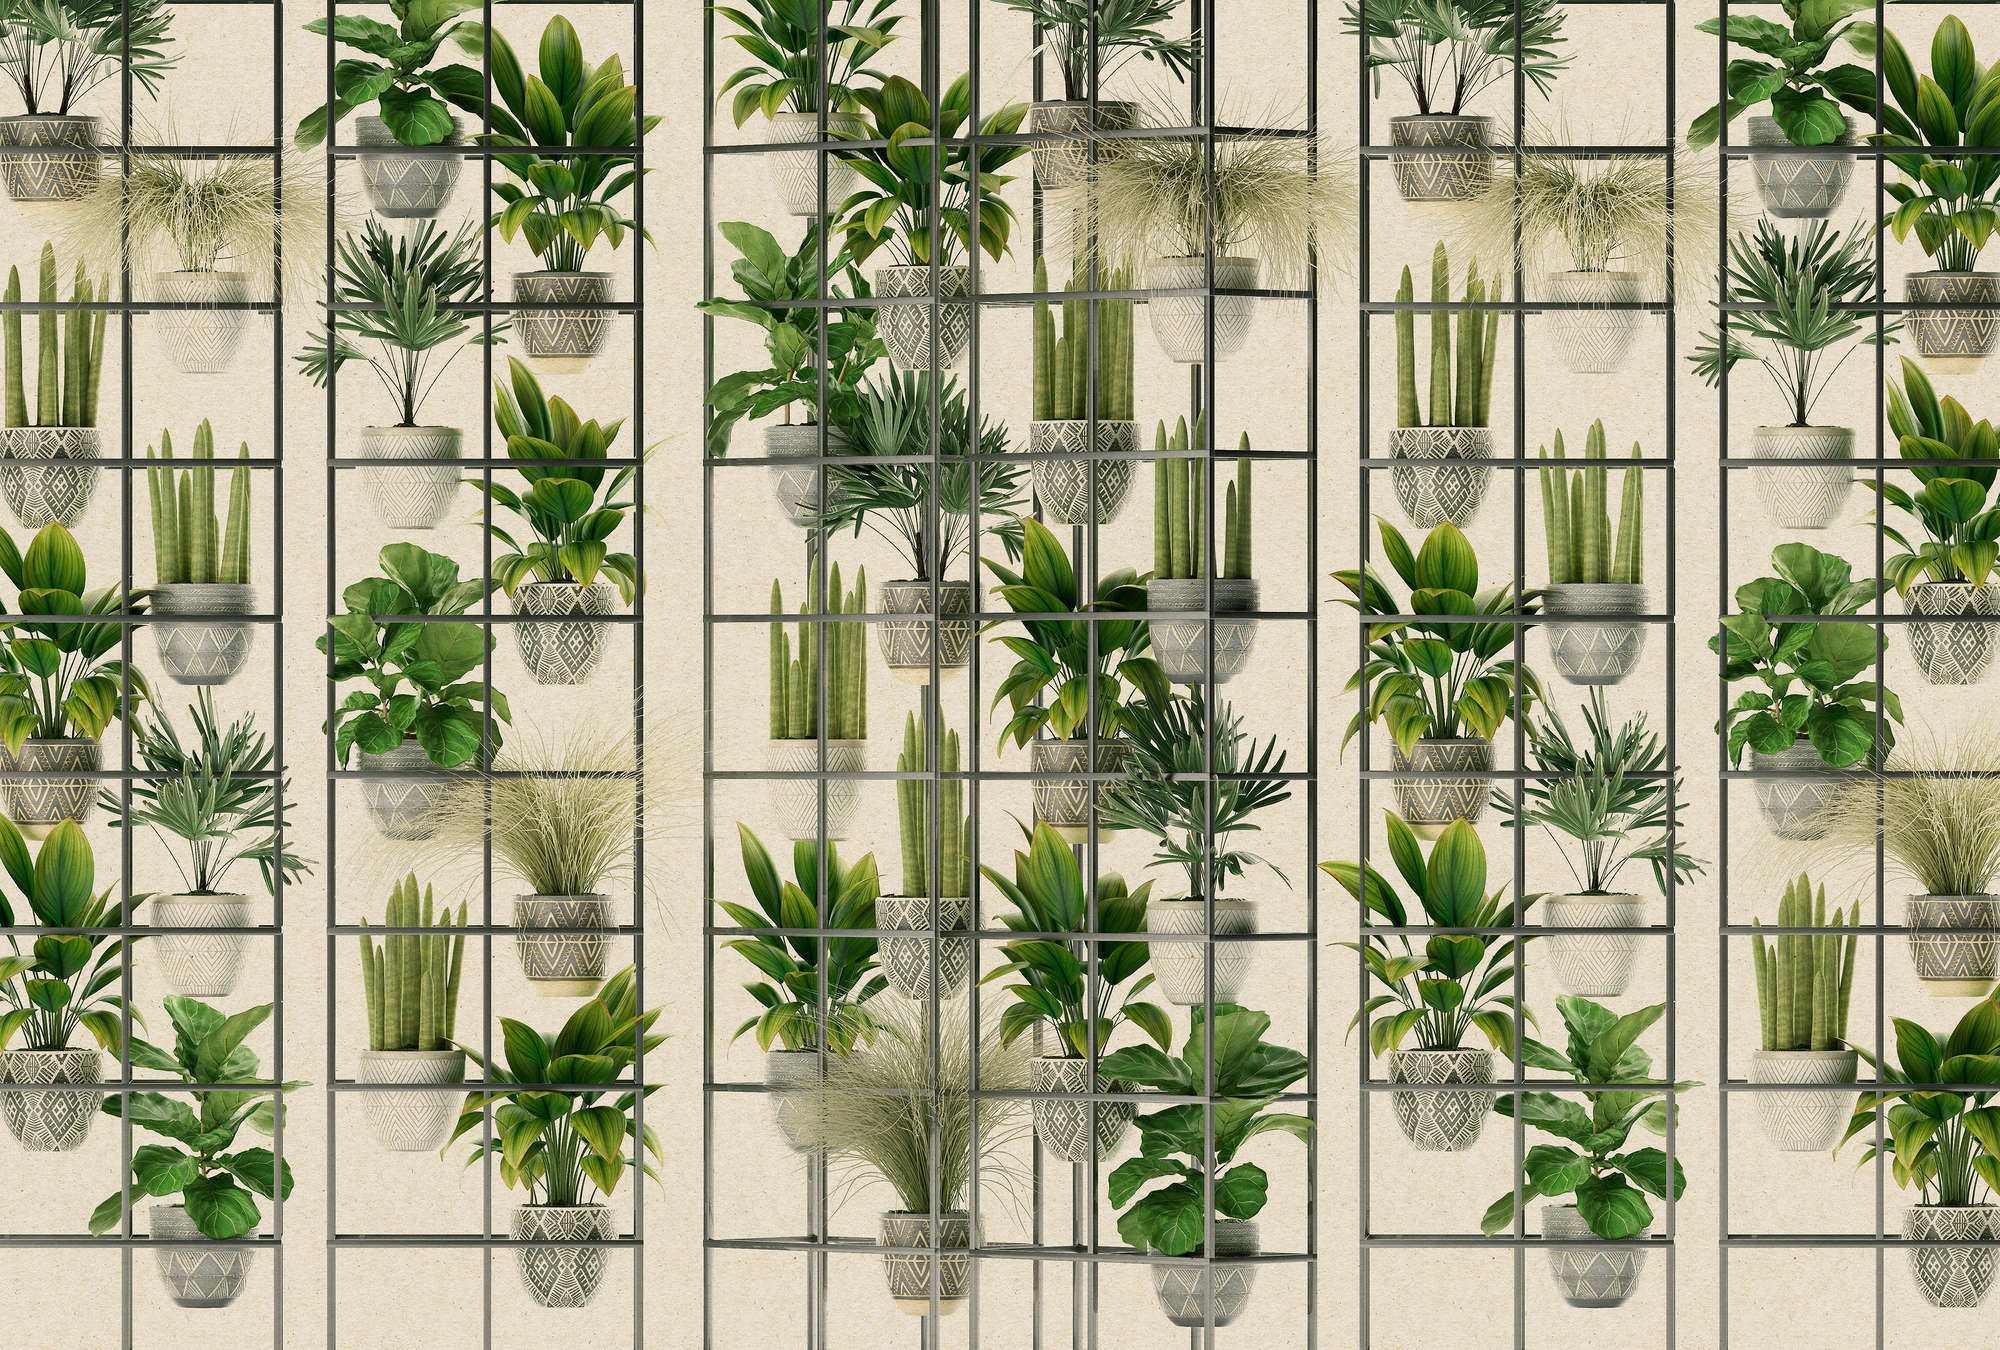             Plant Shop 2 - Muurschildering moderne plantenmuur in groen & grijs
        